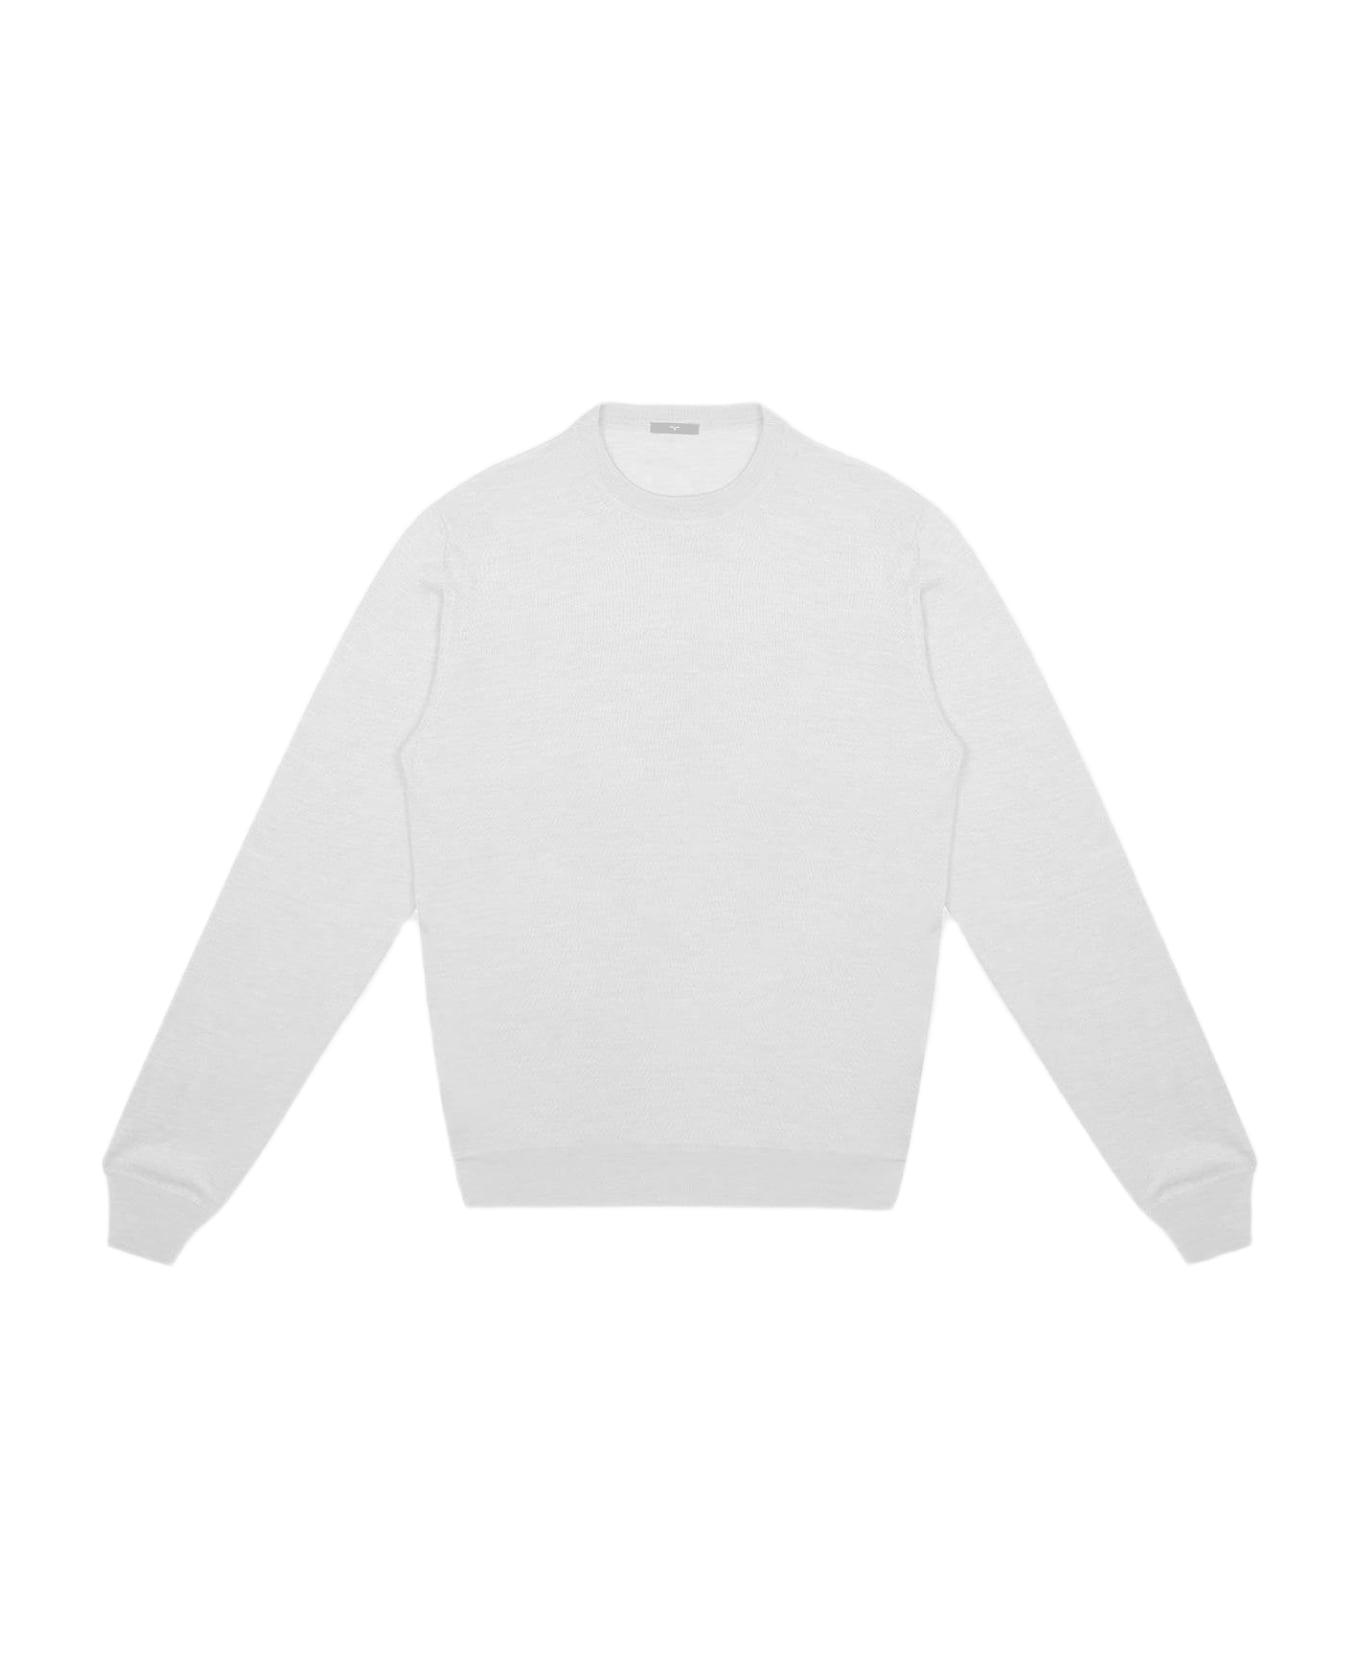 Larusmiani Cap Martin Crew Neck Sweater - White